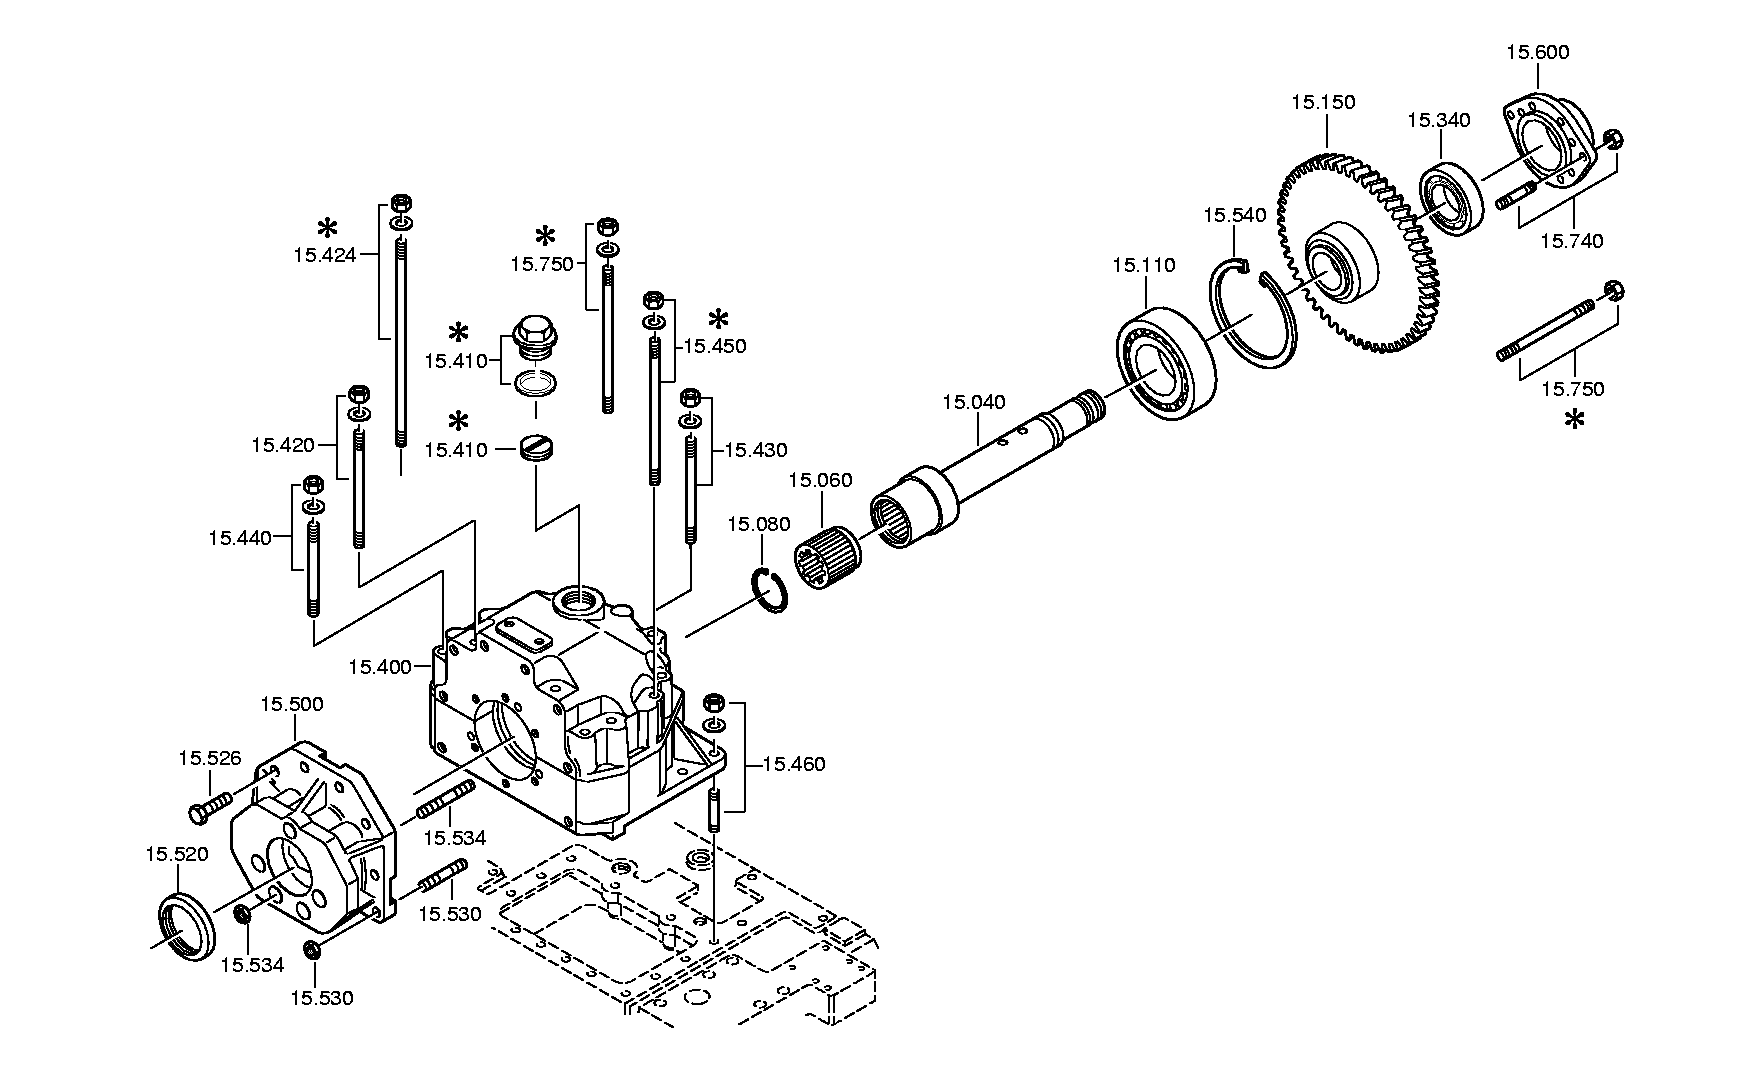 drawing for URBANEK RICHARD GMBH + CO. 052837 - SCREW PLUG (figure 1)